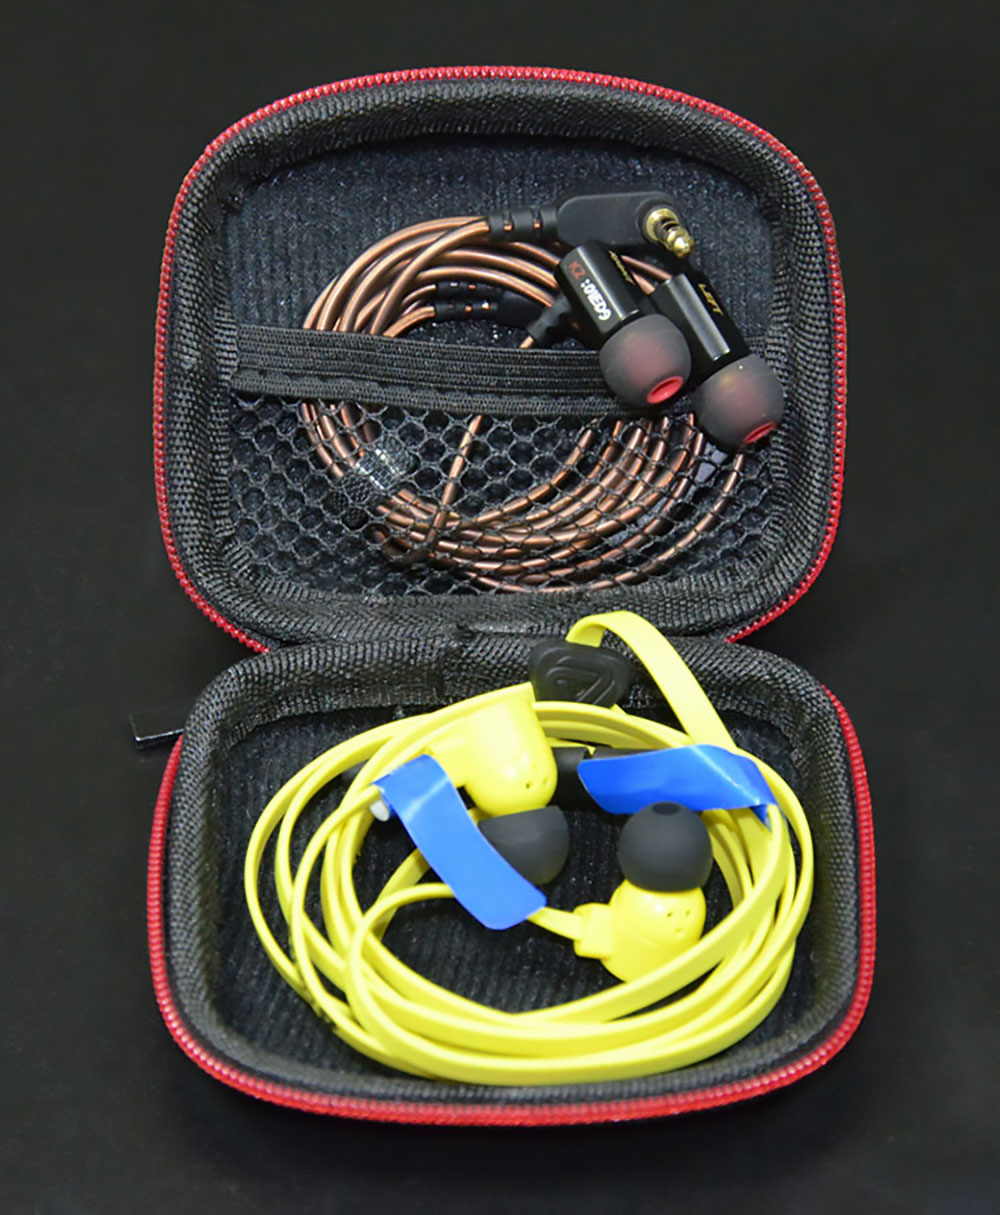 KZ EVA Protective Case for Earphone Storage Portable - Black